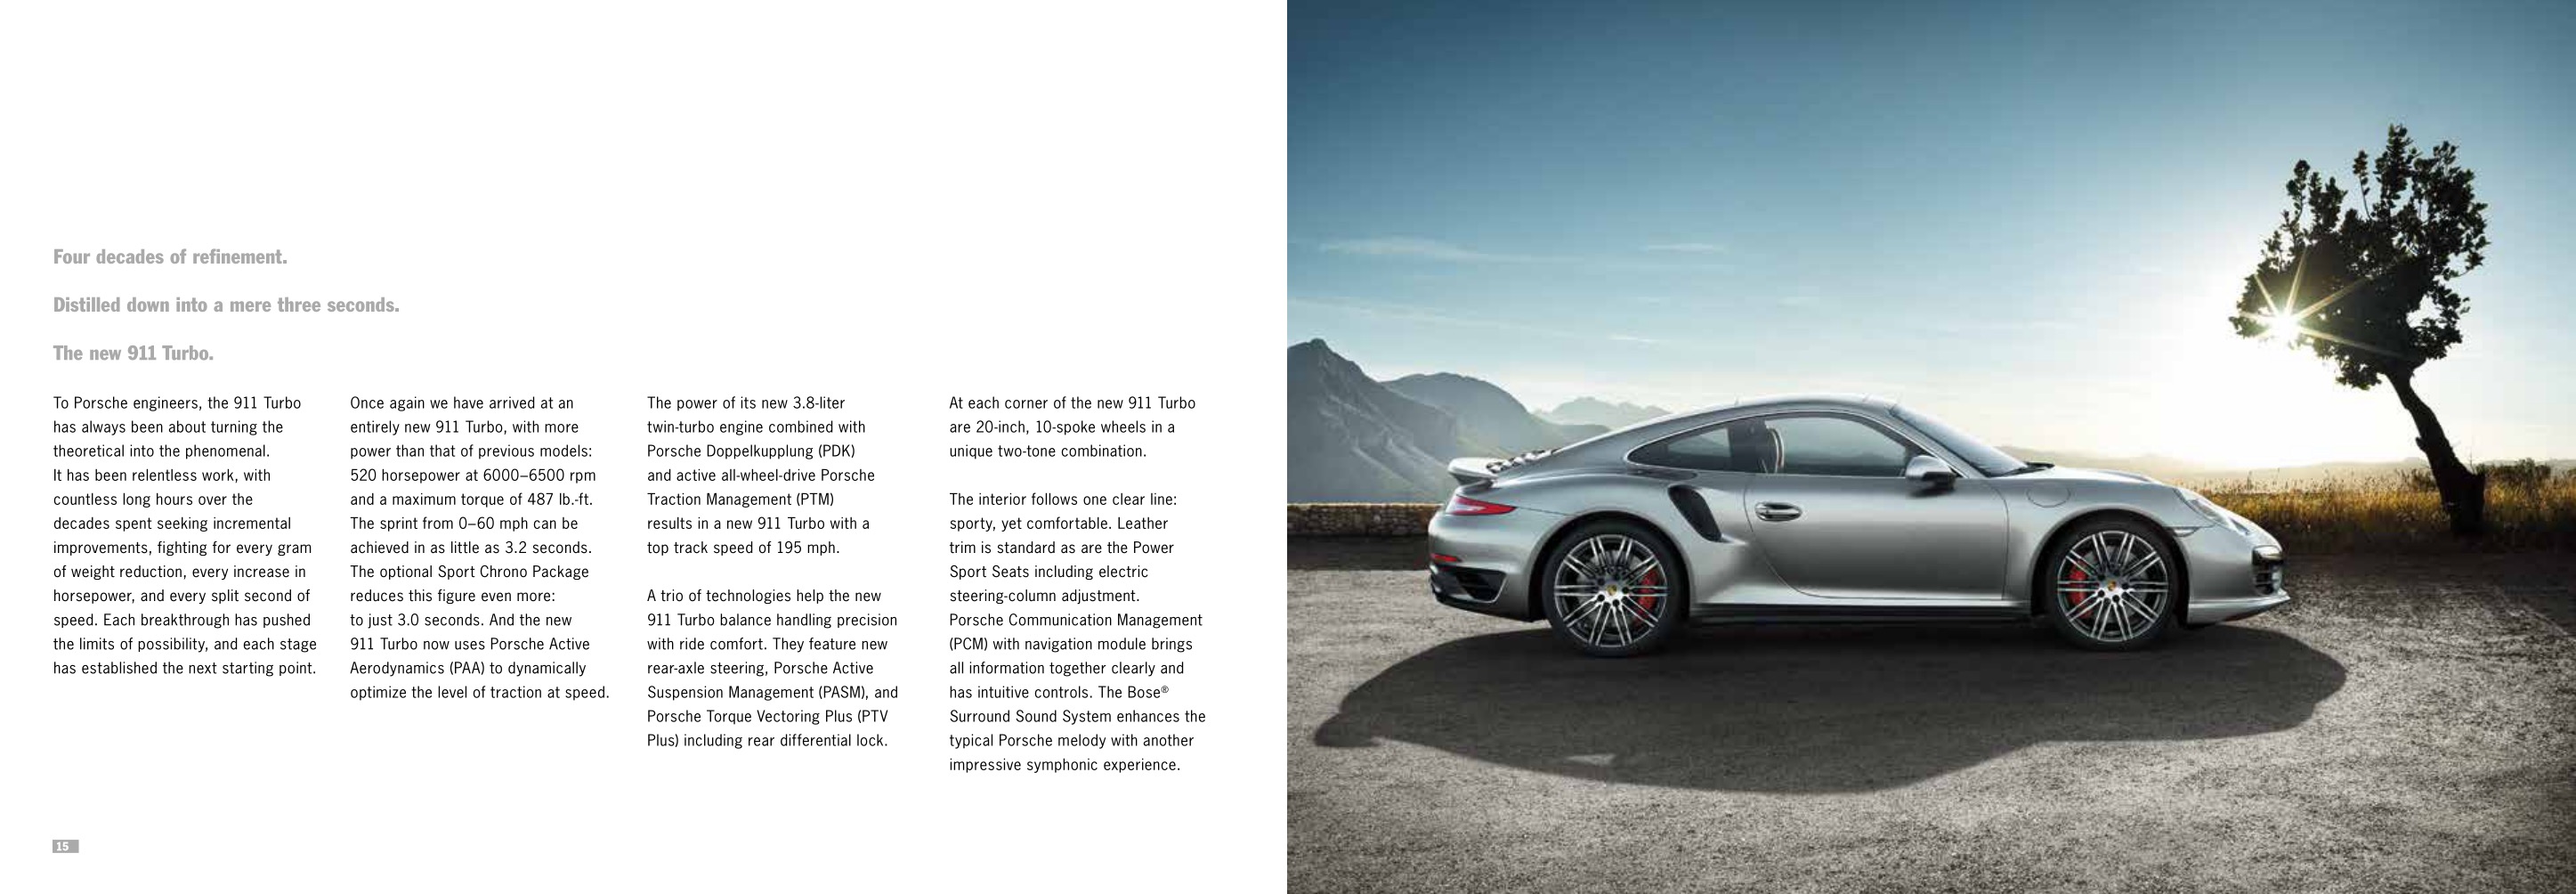 2014 Porsche 911 Turbo Brochure Page 24